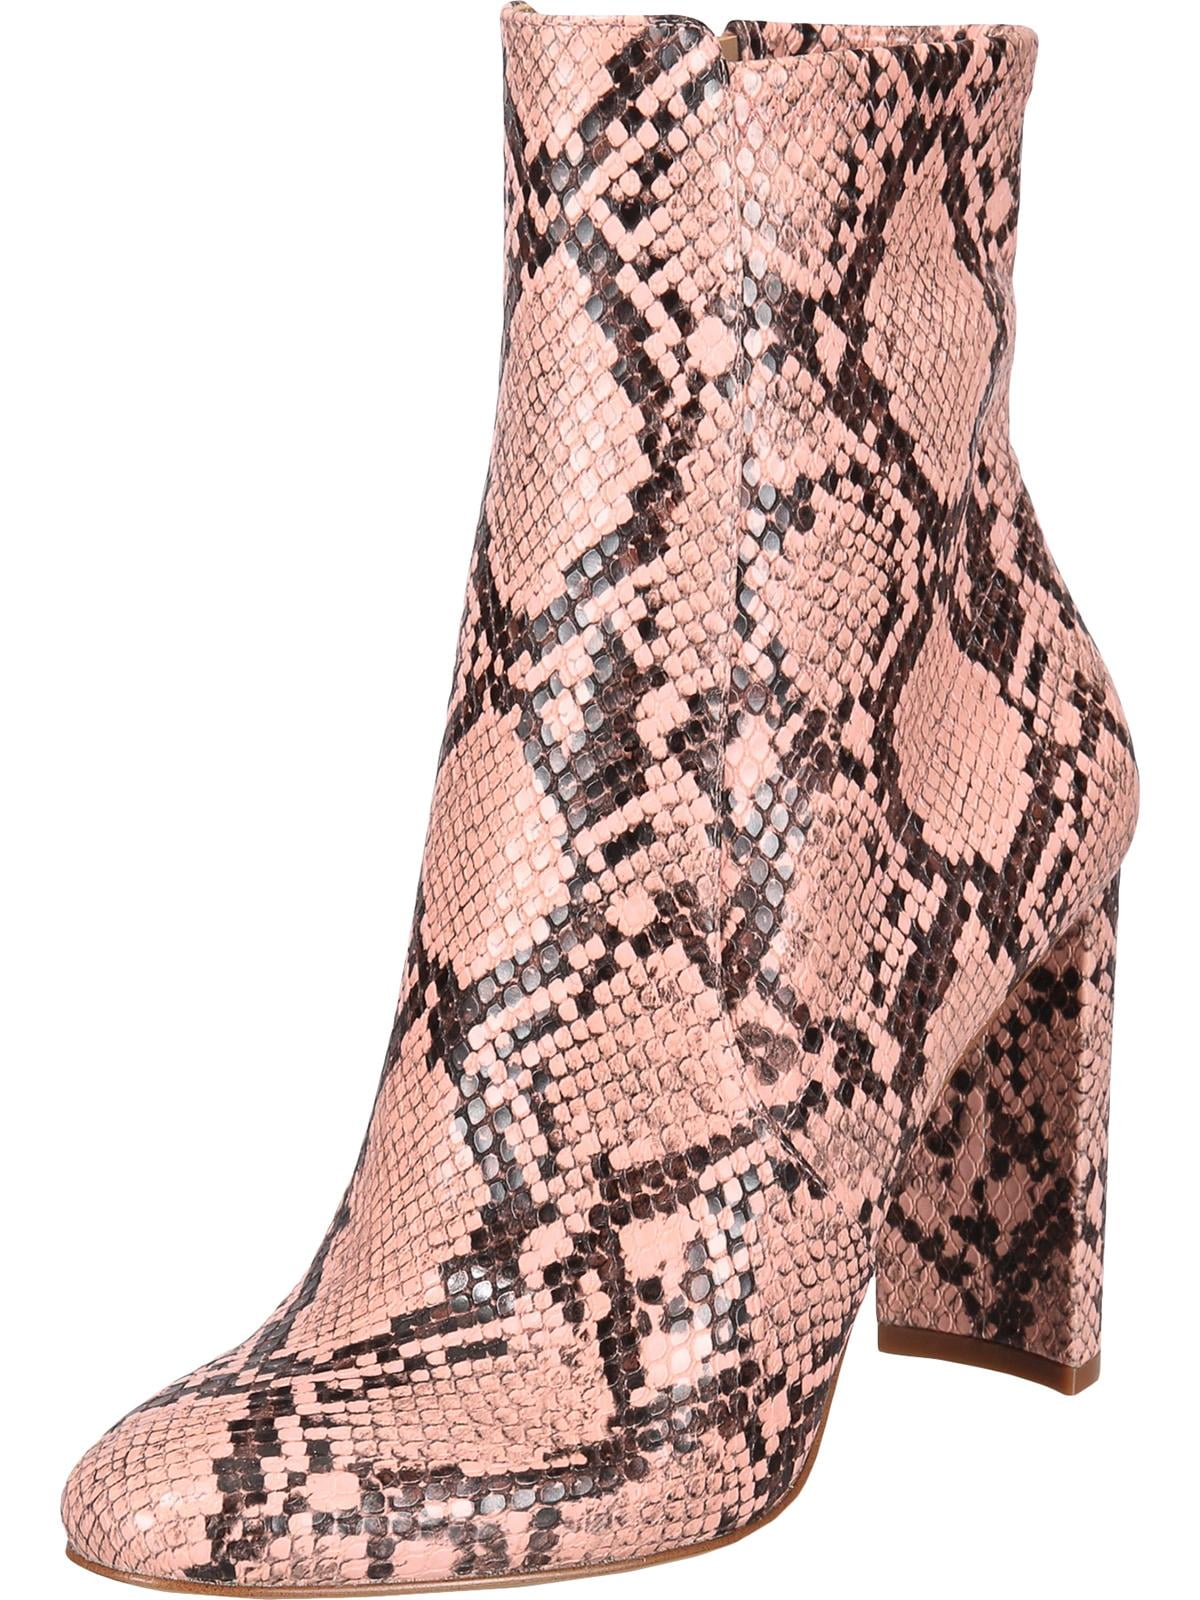 Thanksgiving Erkende Bloom Aldo Womens Aurella Metallic Ankle Booties Pink 6.5 Medium (B,M) -  Walmart.com